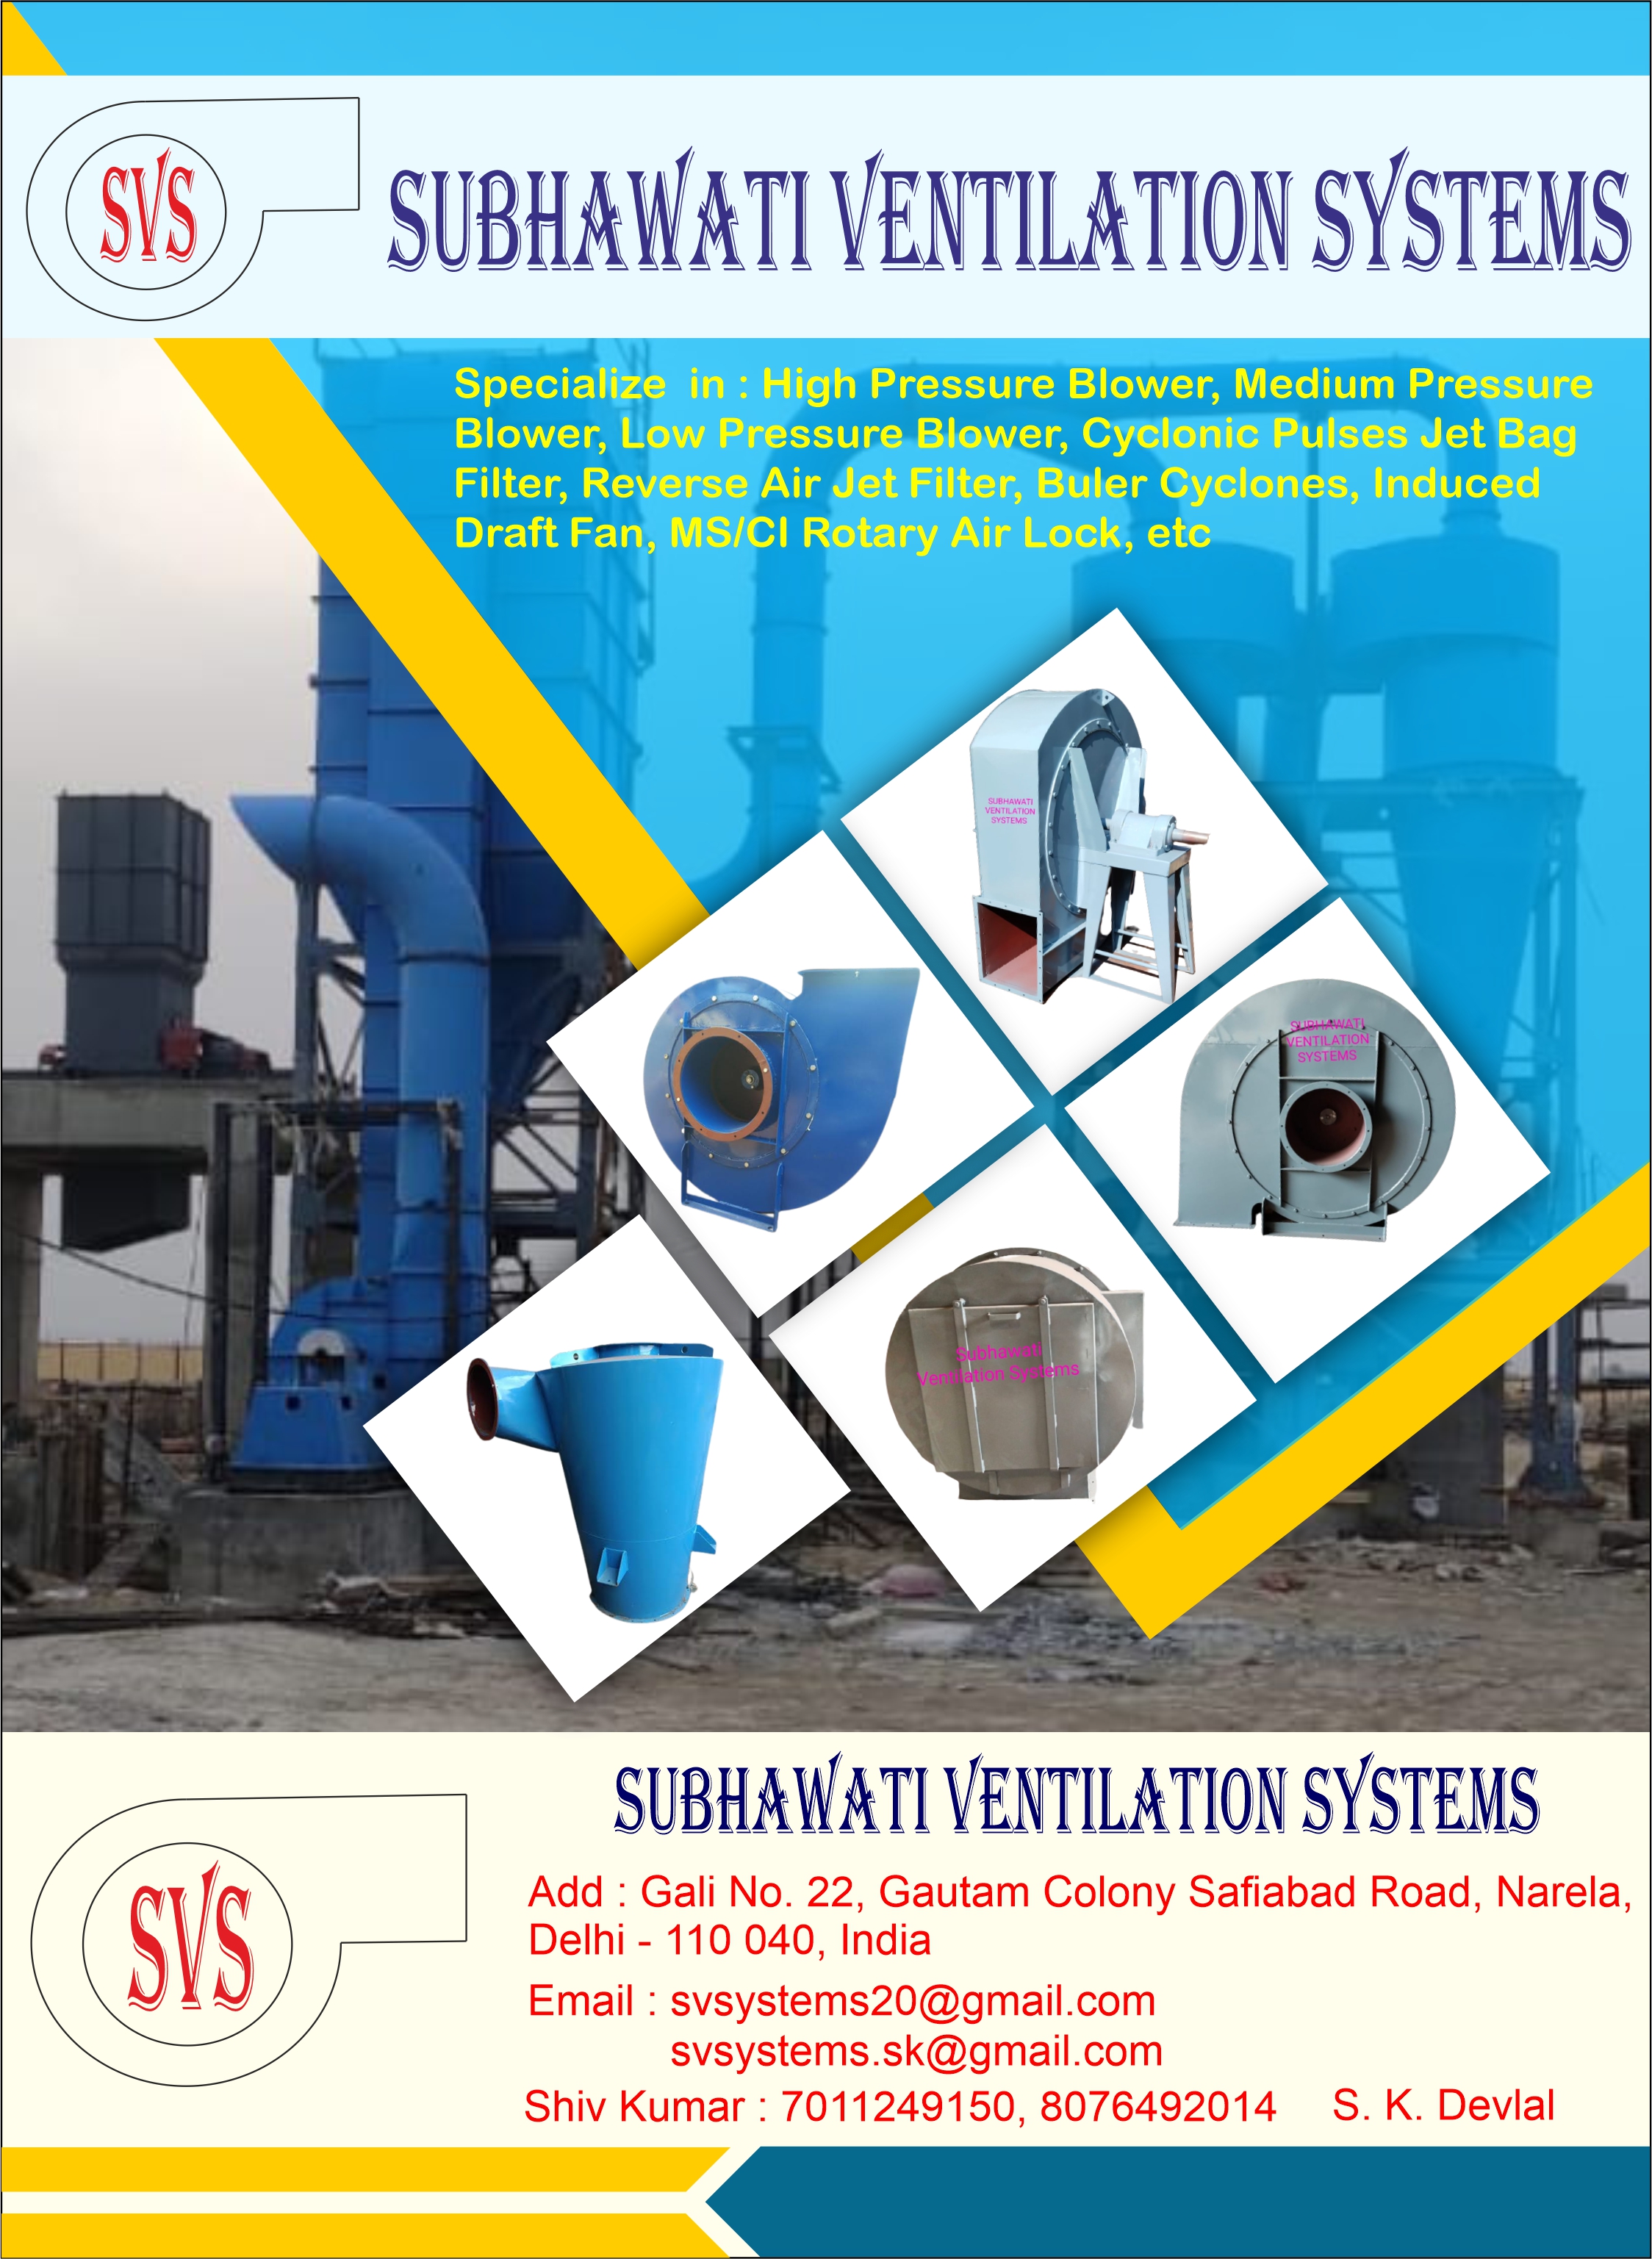 Subhawati Ventilation Systems